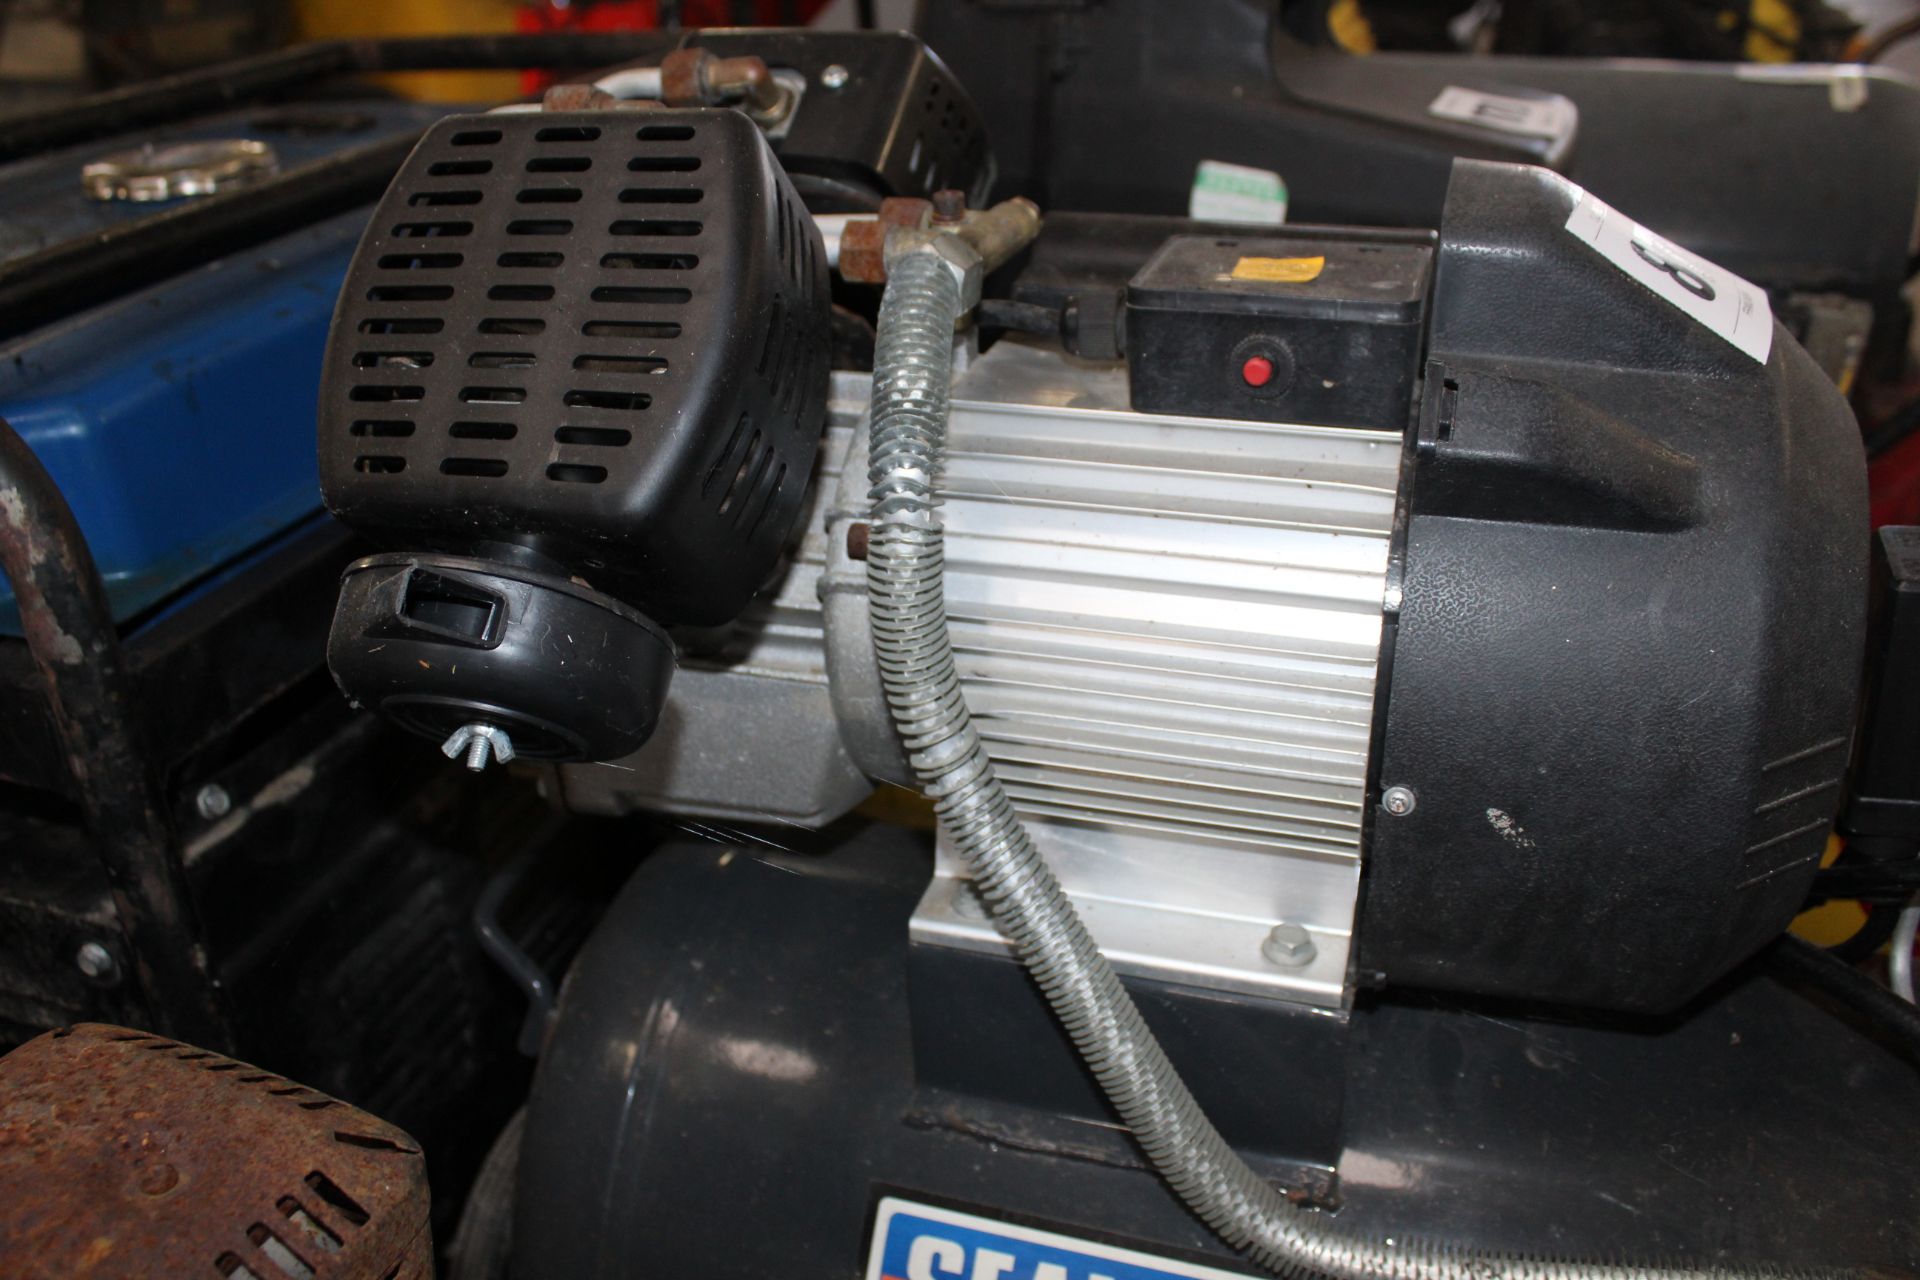 Sealey 50lt workshop compressor. For sale due to sale of farm. - Image 4 of 4